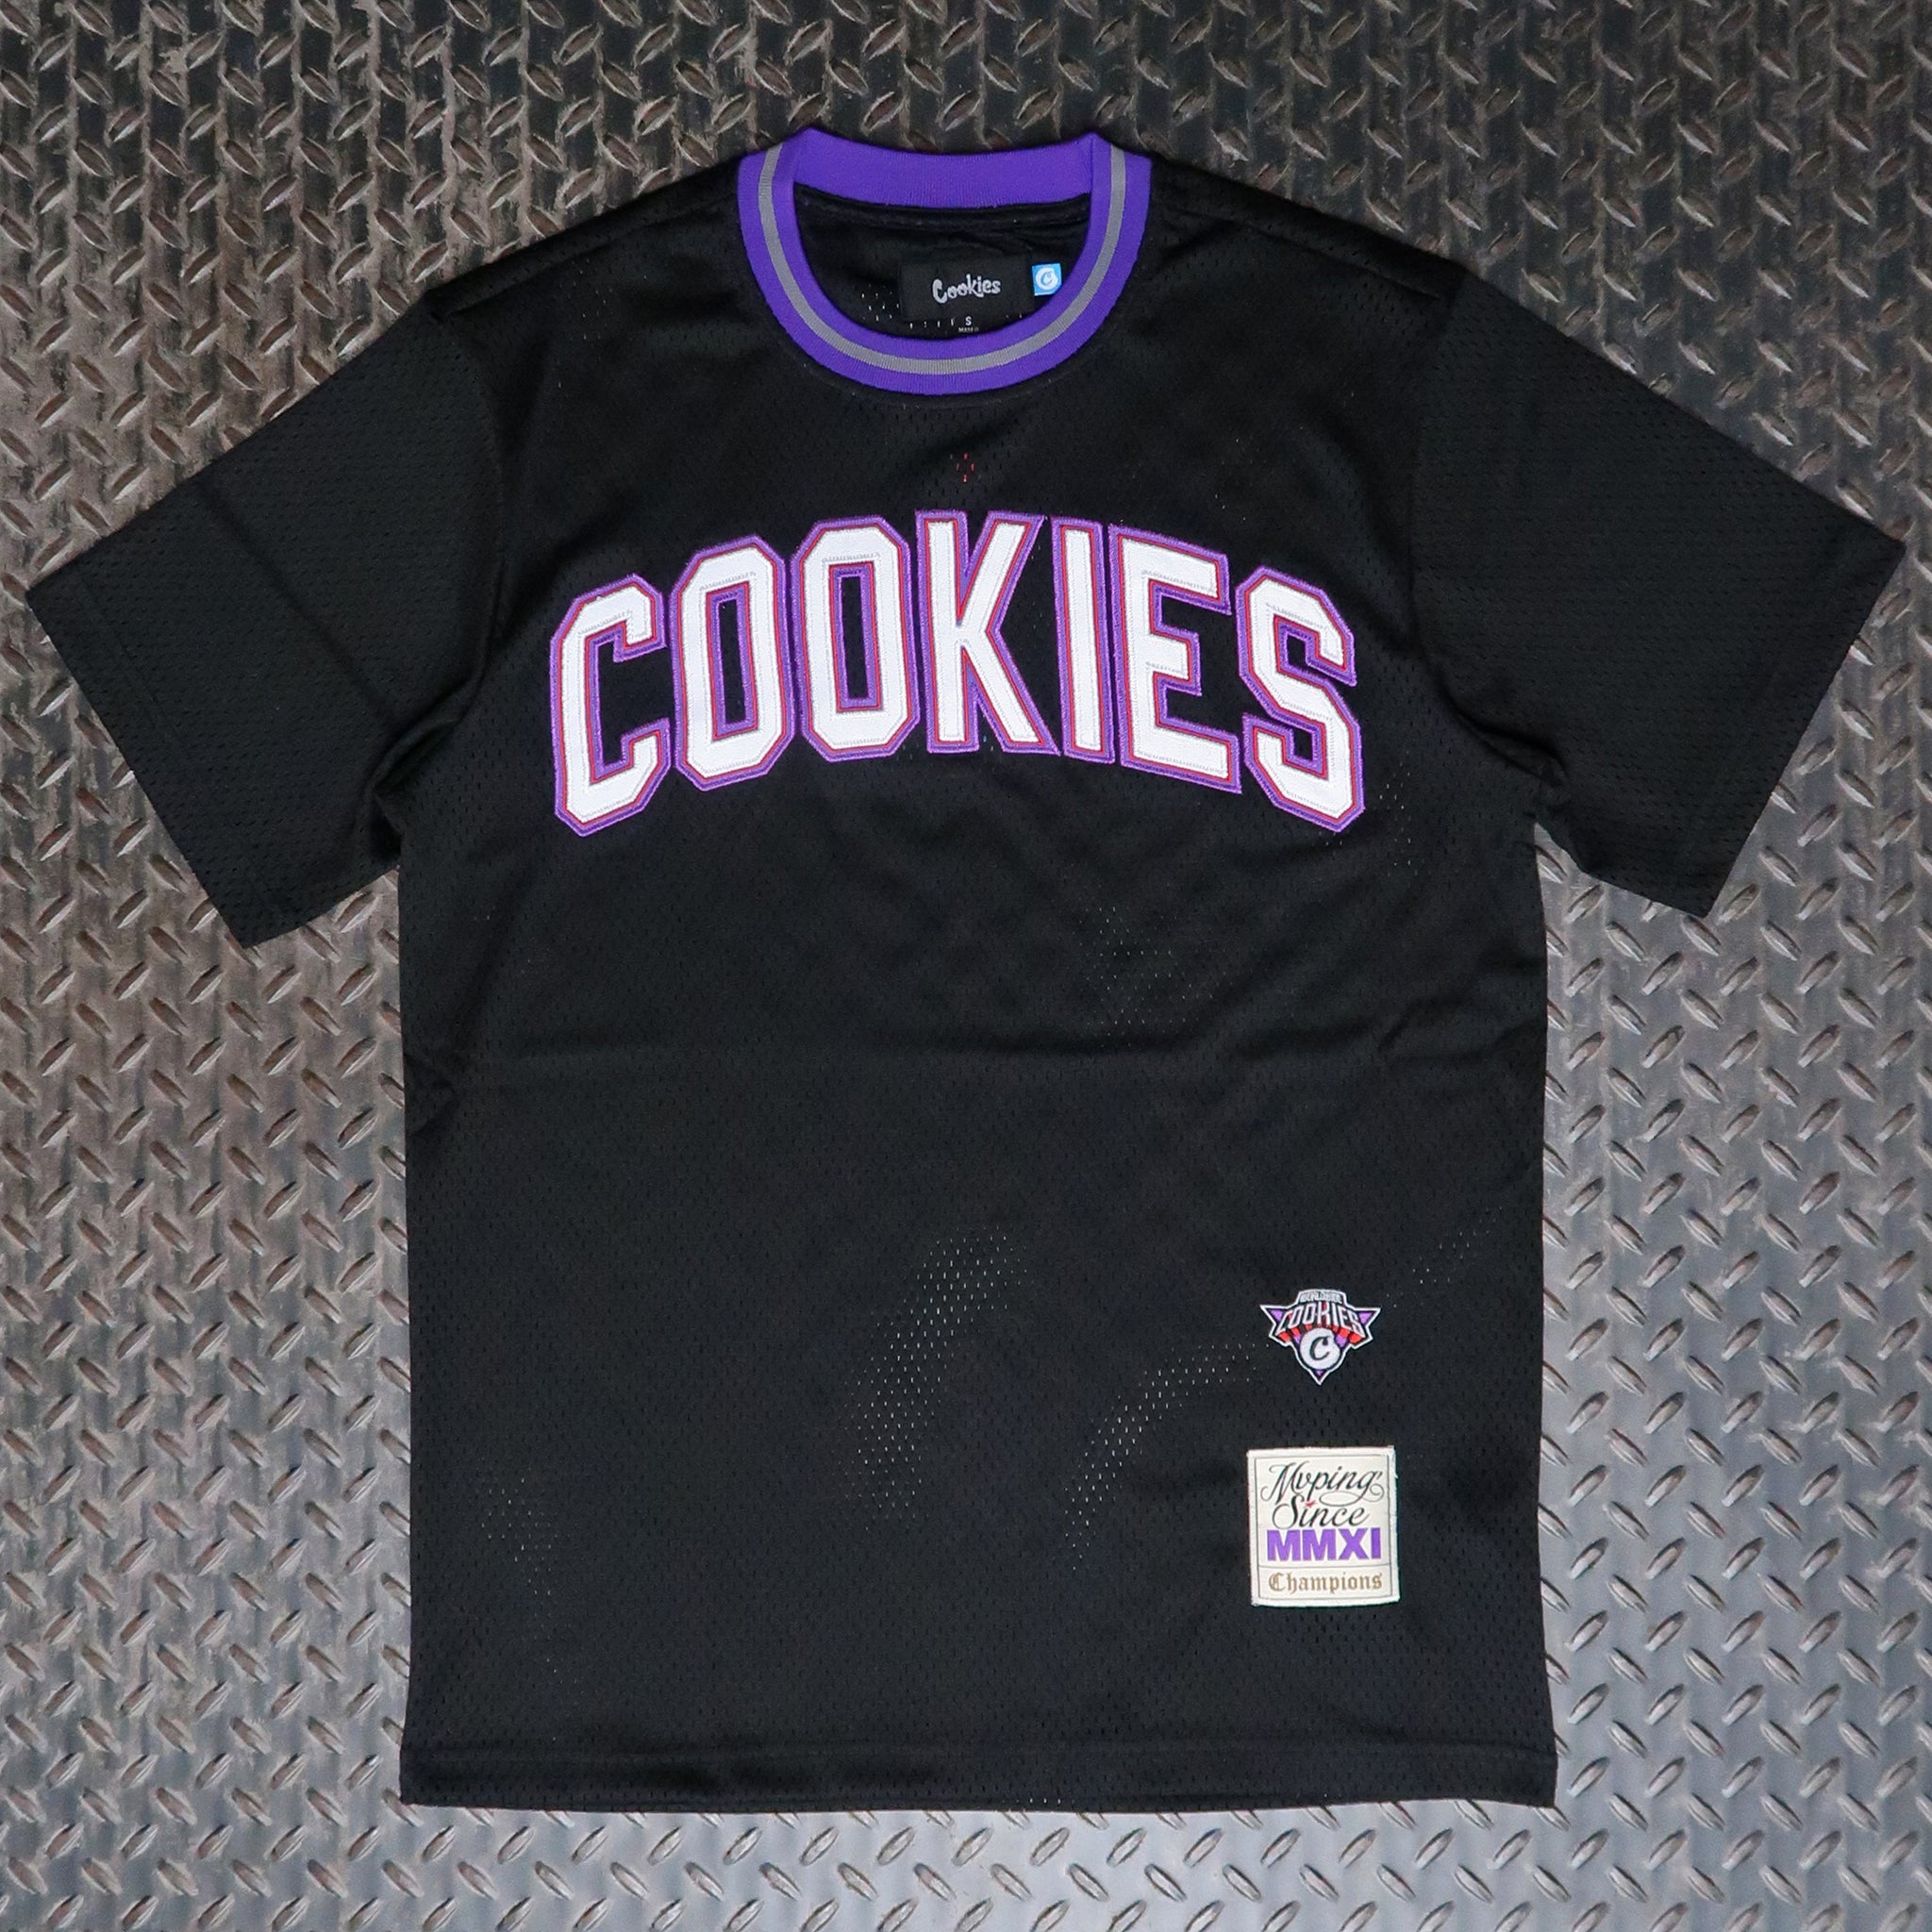 Cookies Full Clip Short Sleeve Mesh Jersey Black CM241KST05